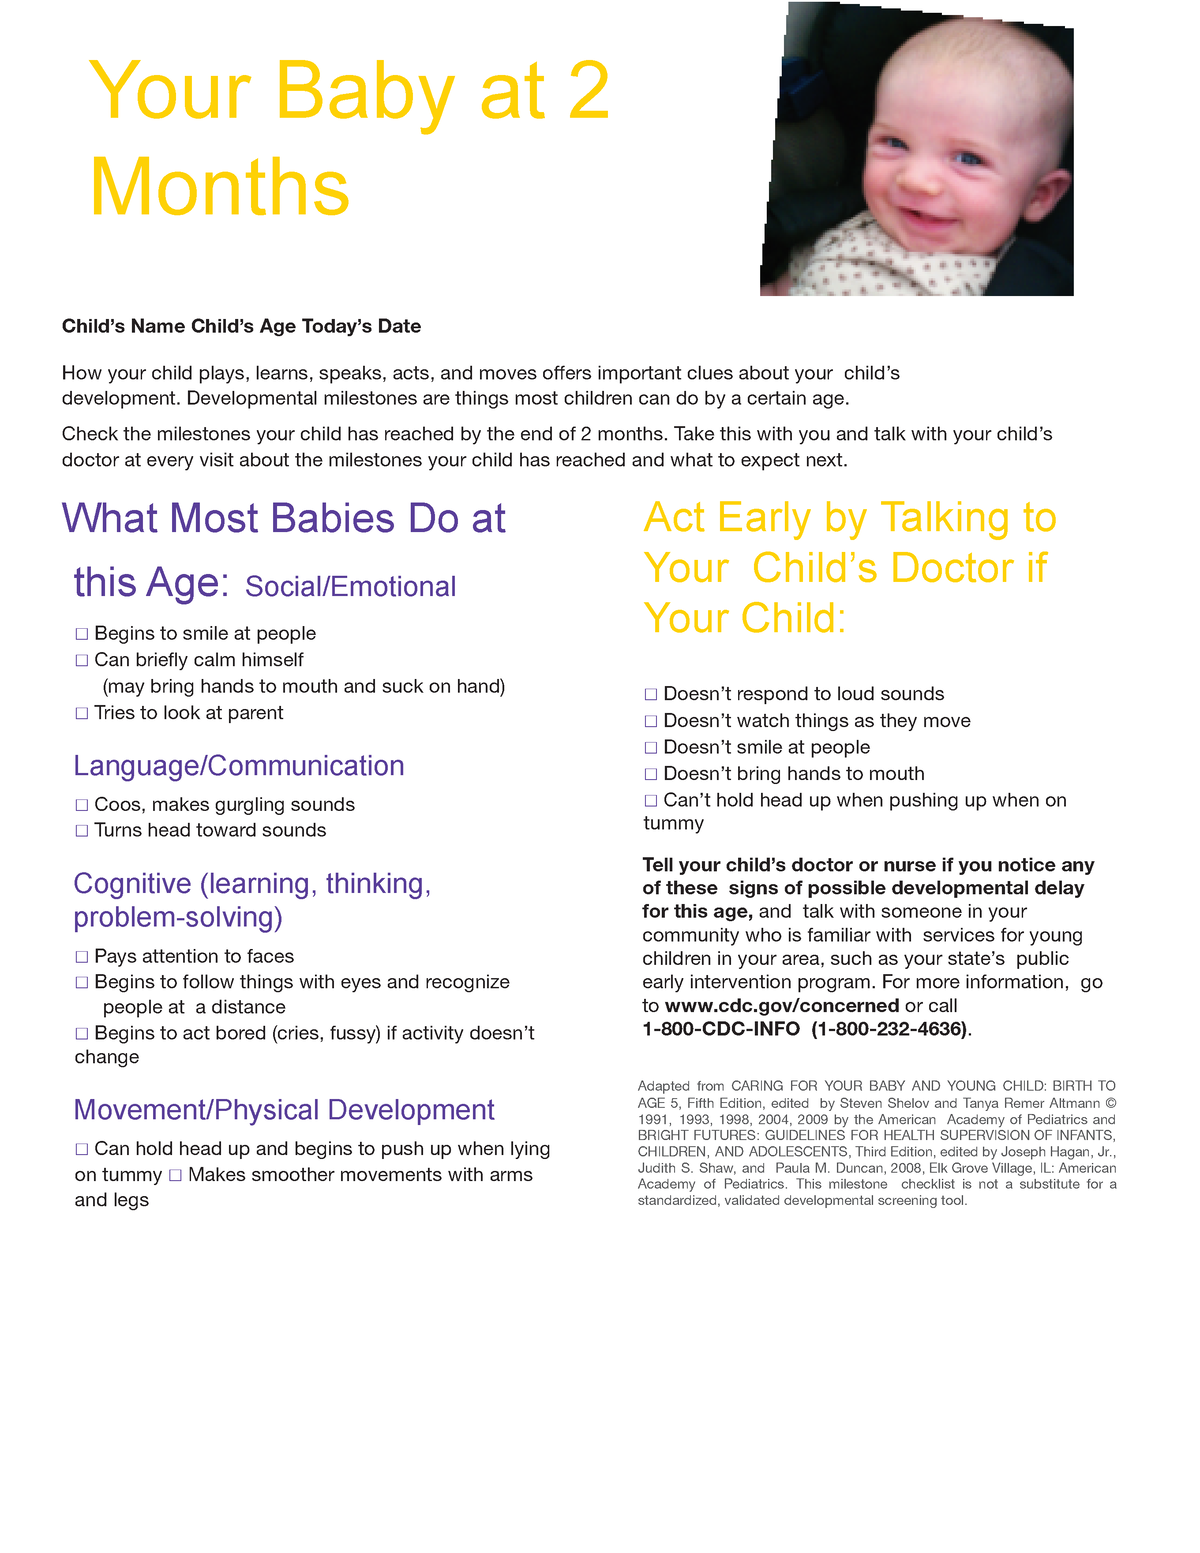 Developmental Milestones - Your Baby at 2 Months Child’s Name Child’s ...